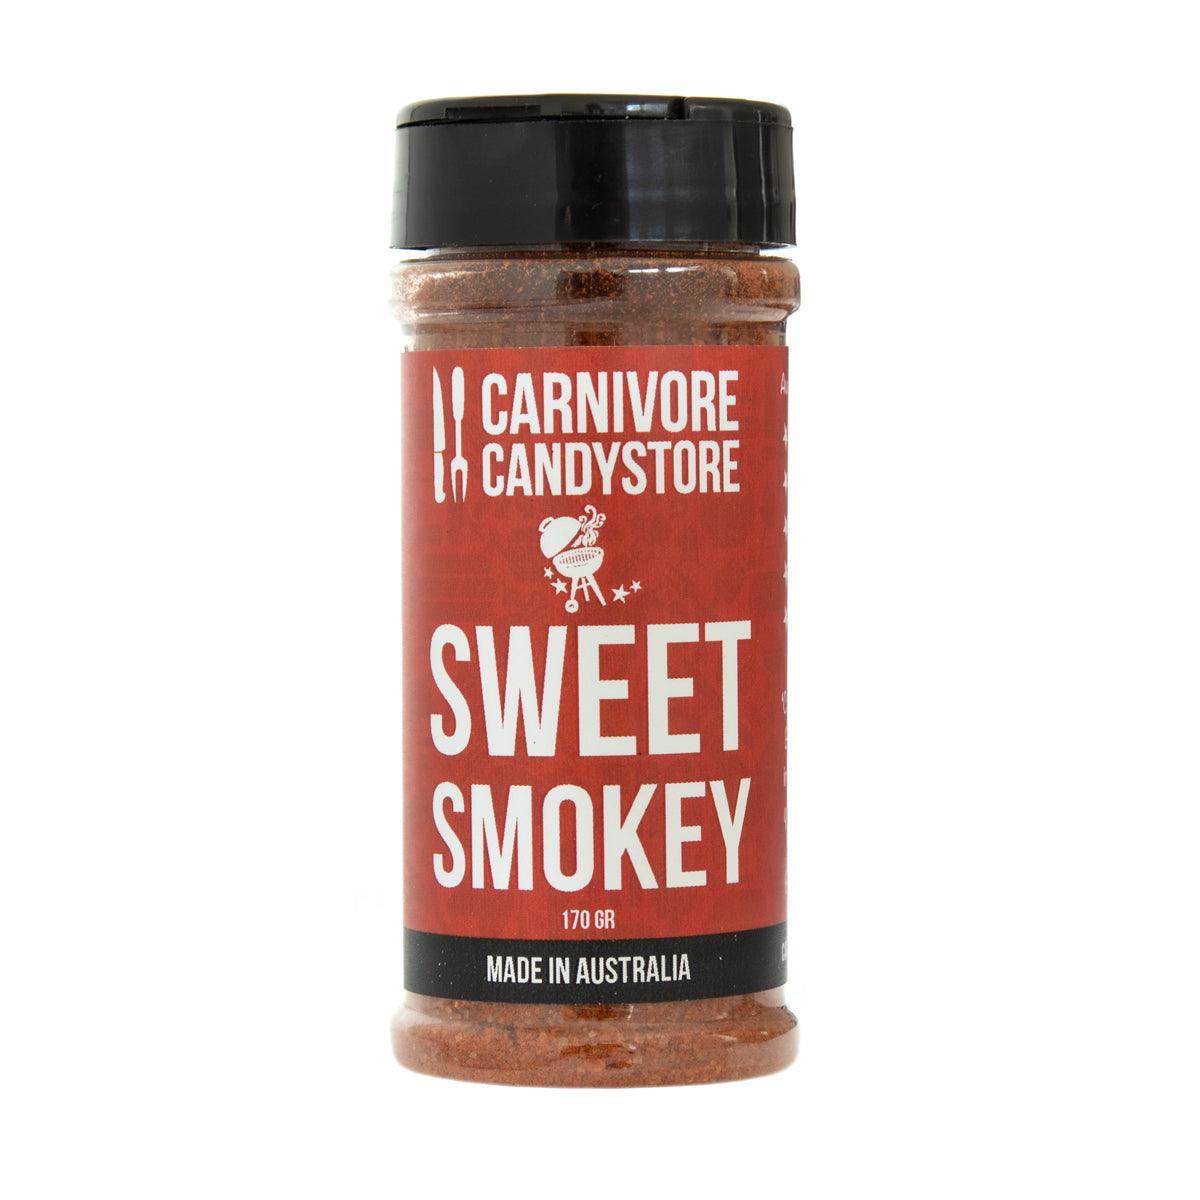 CARNIVORE CANDYSTORE SWEET SMOKEY 170G - Horizon Leisure